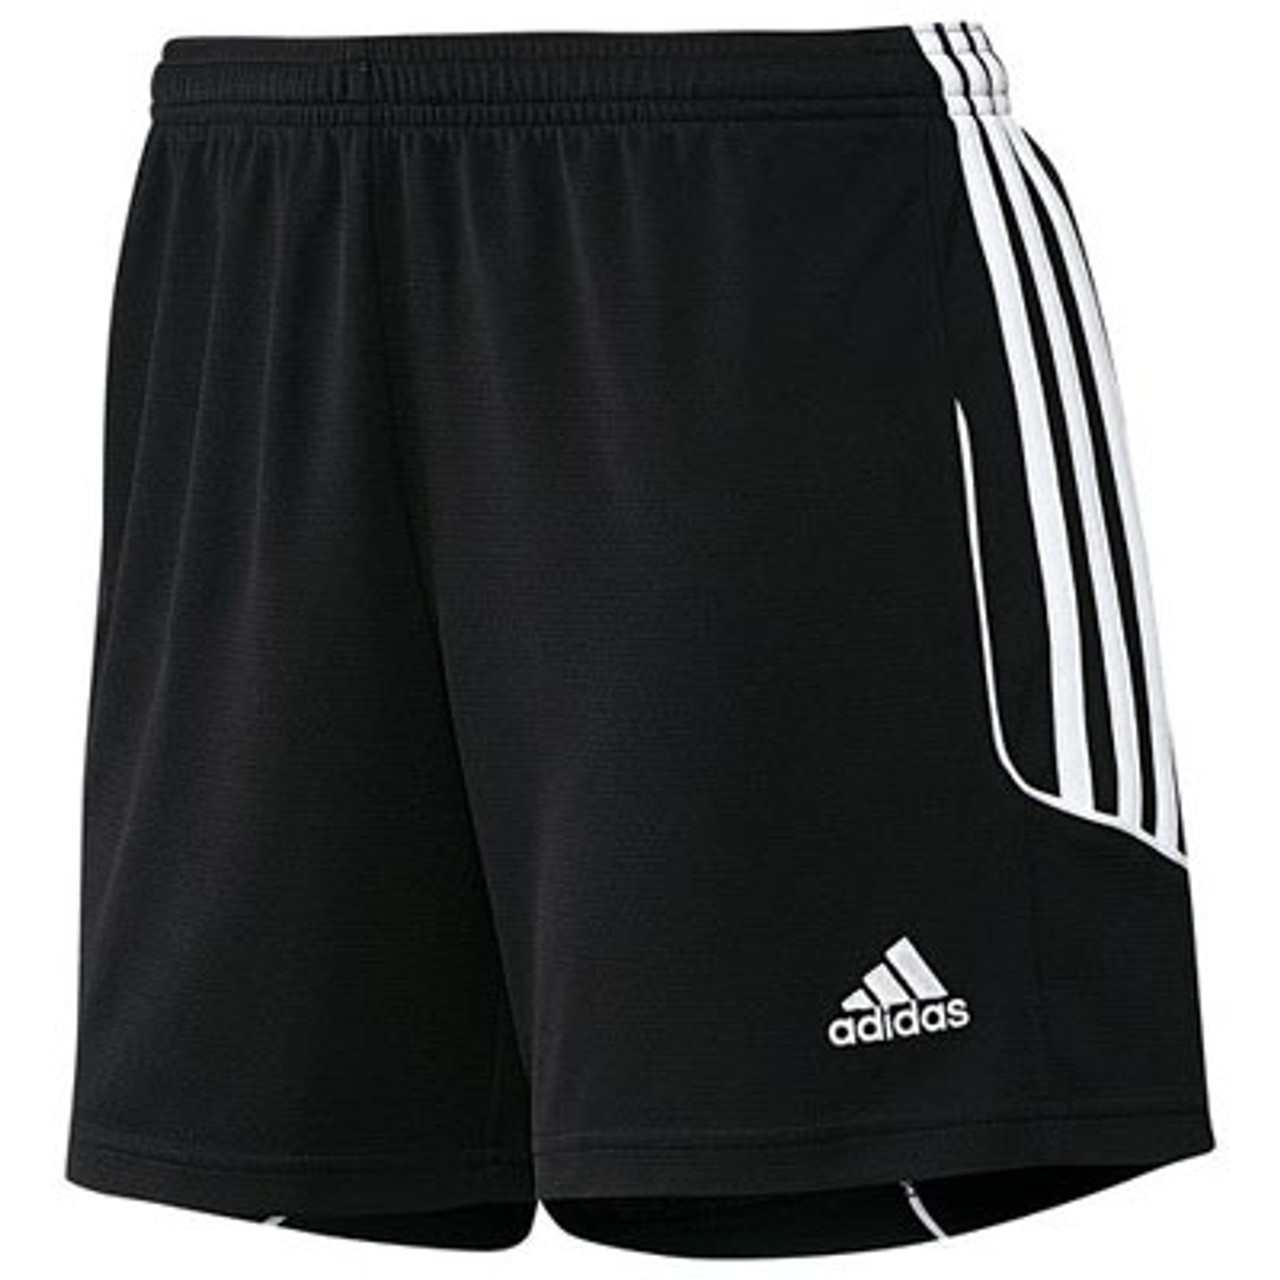 adidas men's squadra soccer shorts